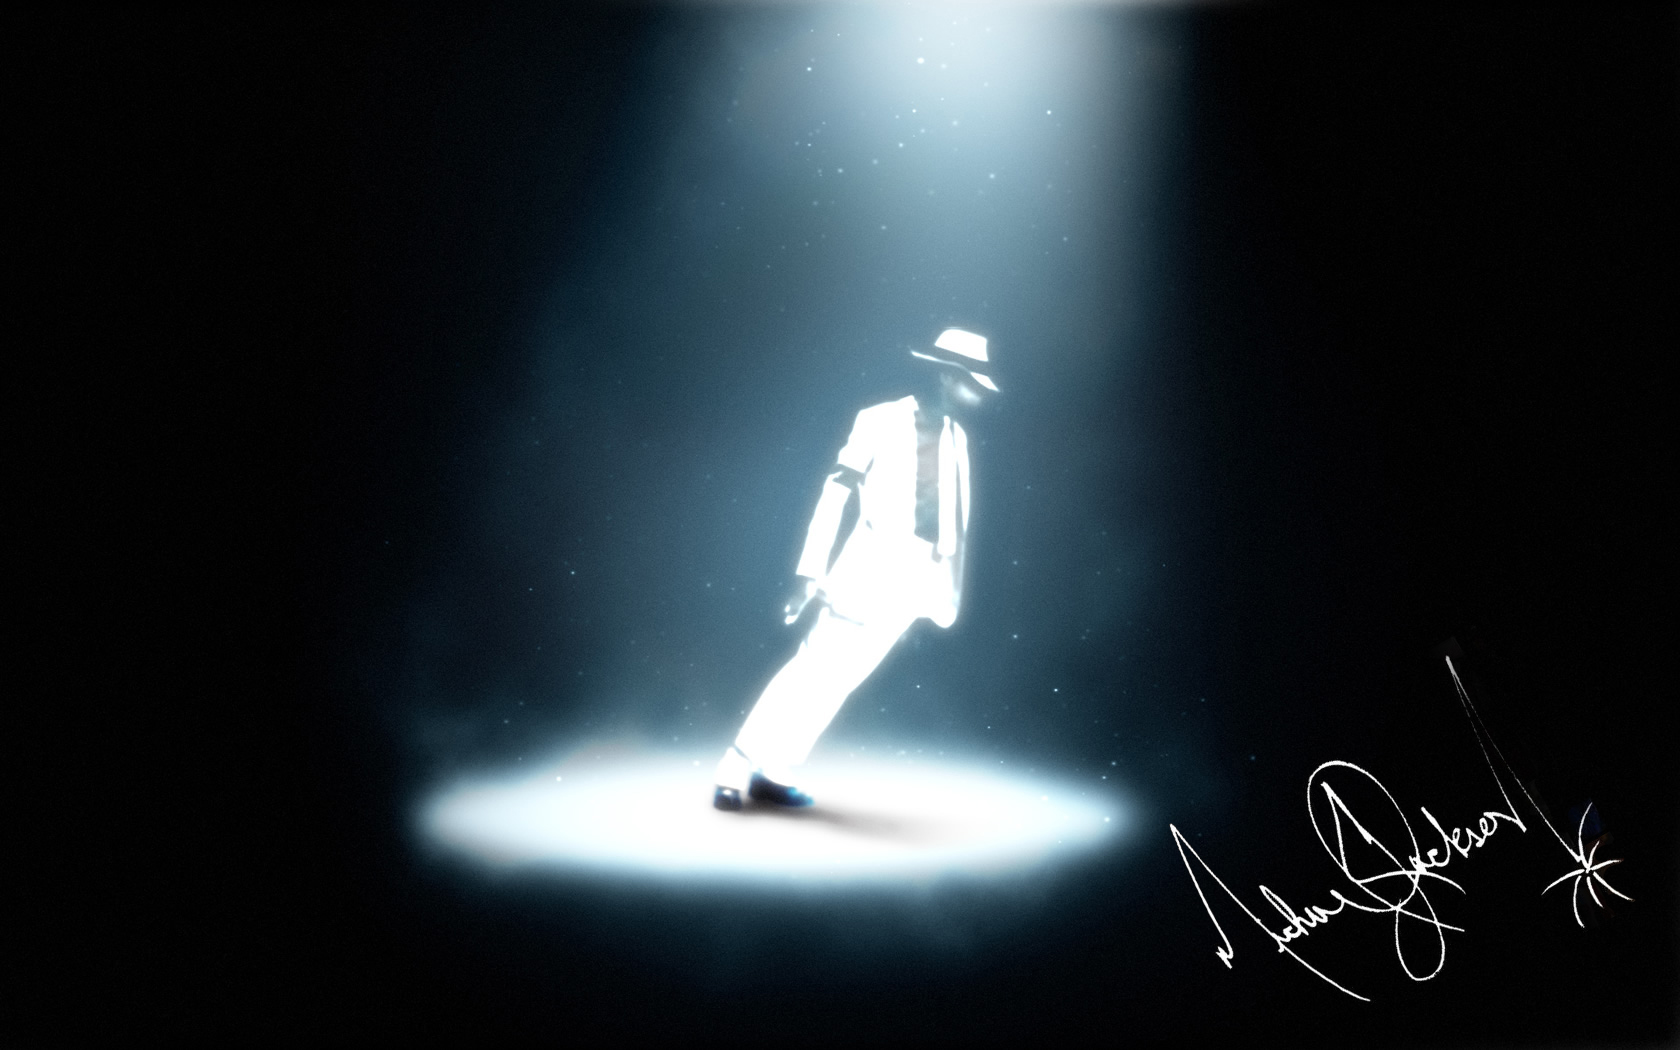 Michael_Jackson_tribute_wall05_by_frey84